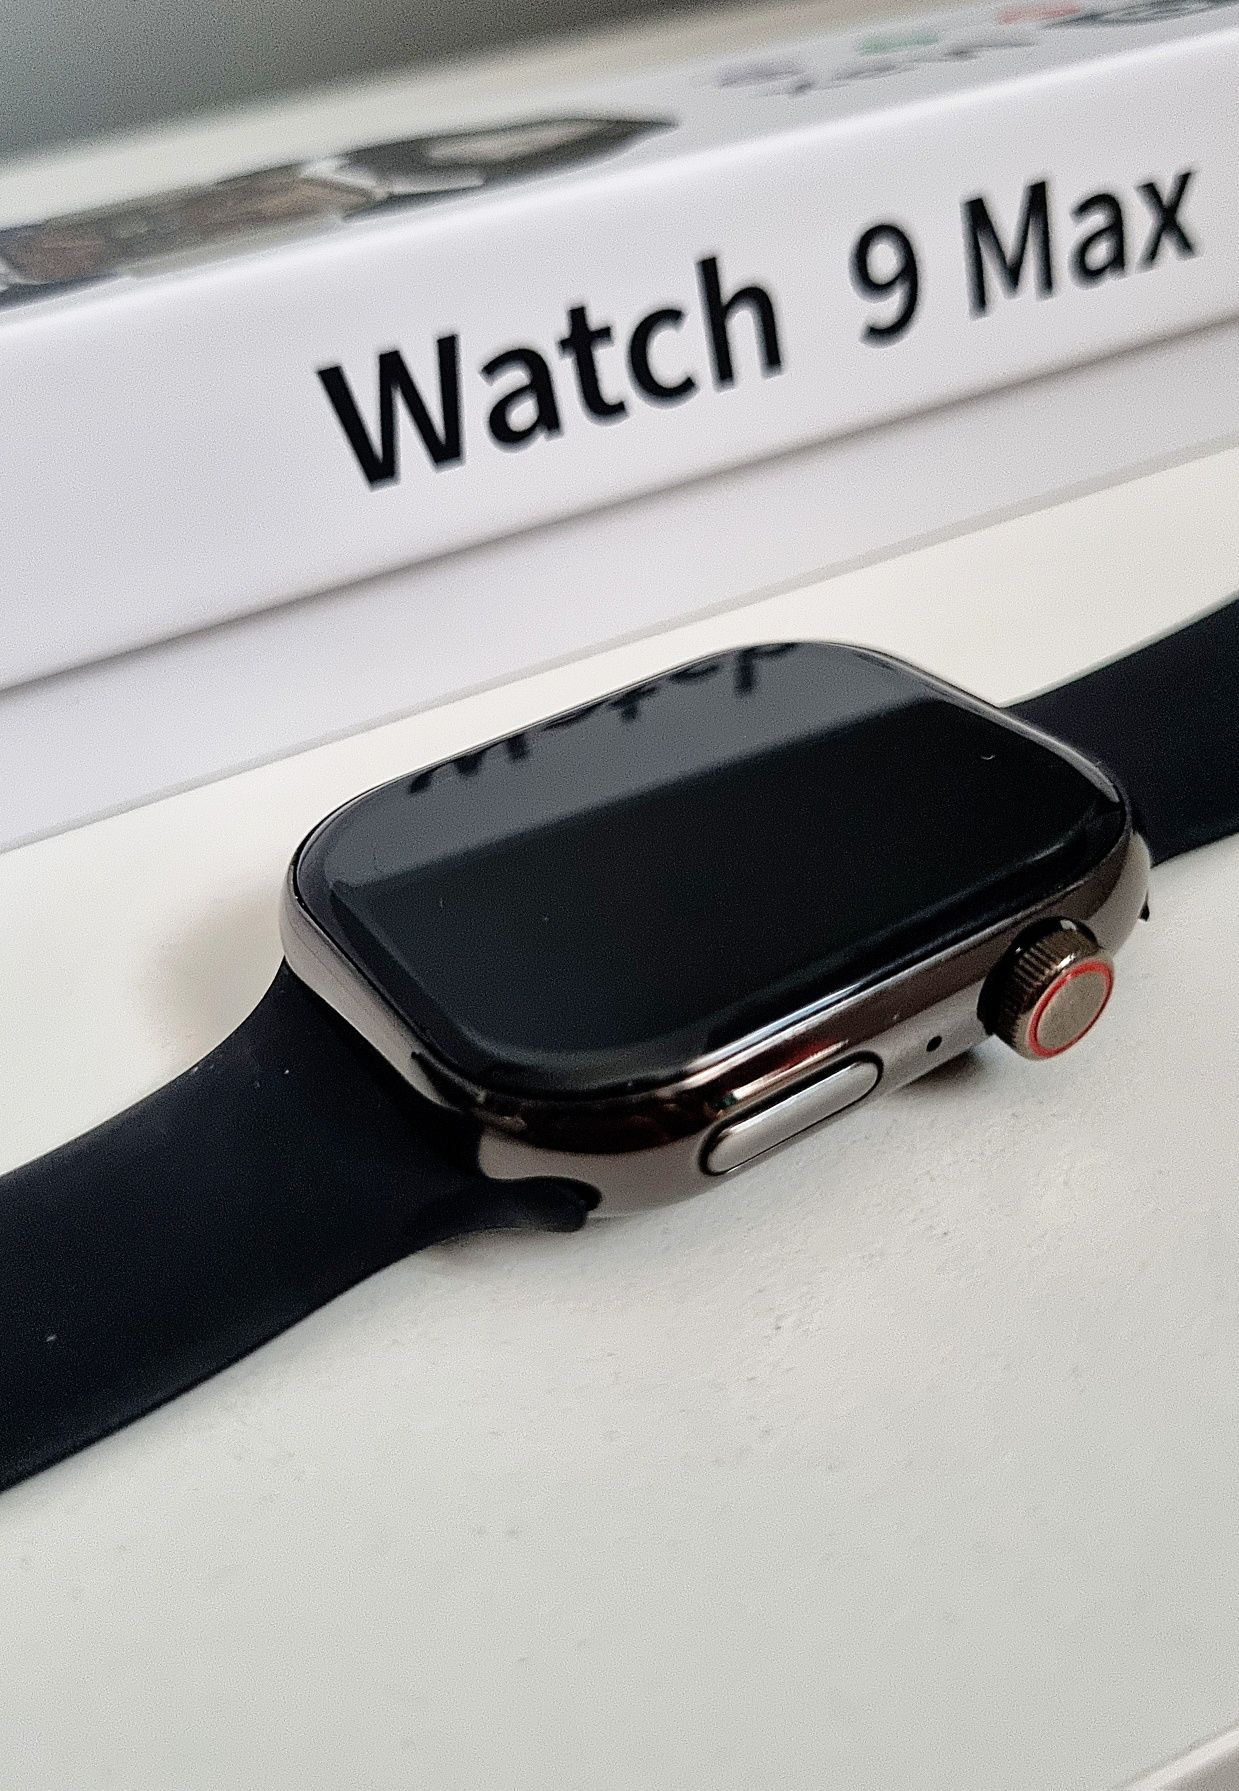 Smartwatch S9 Max nowy